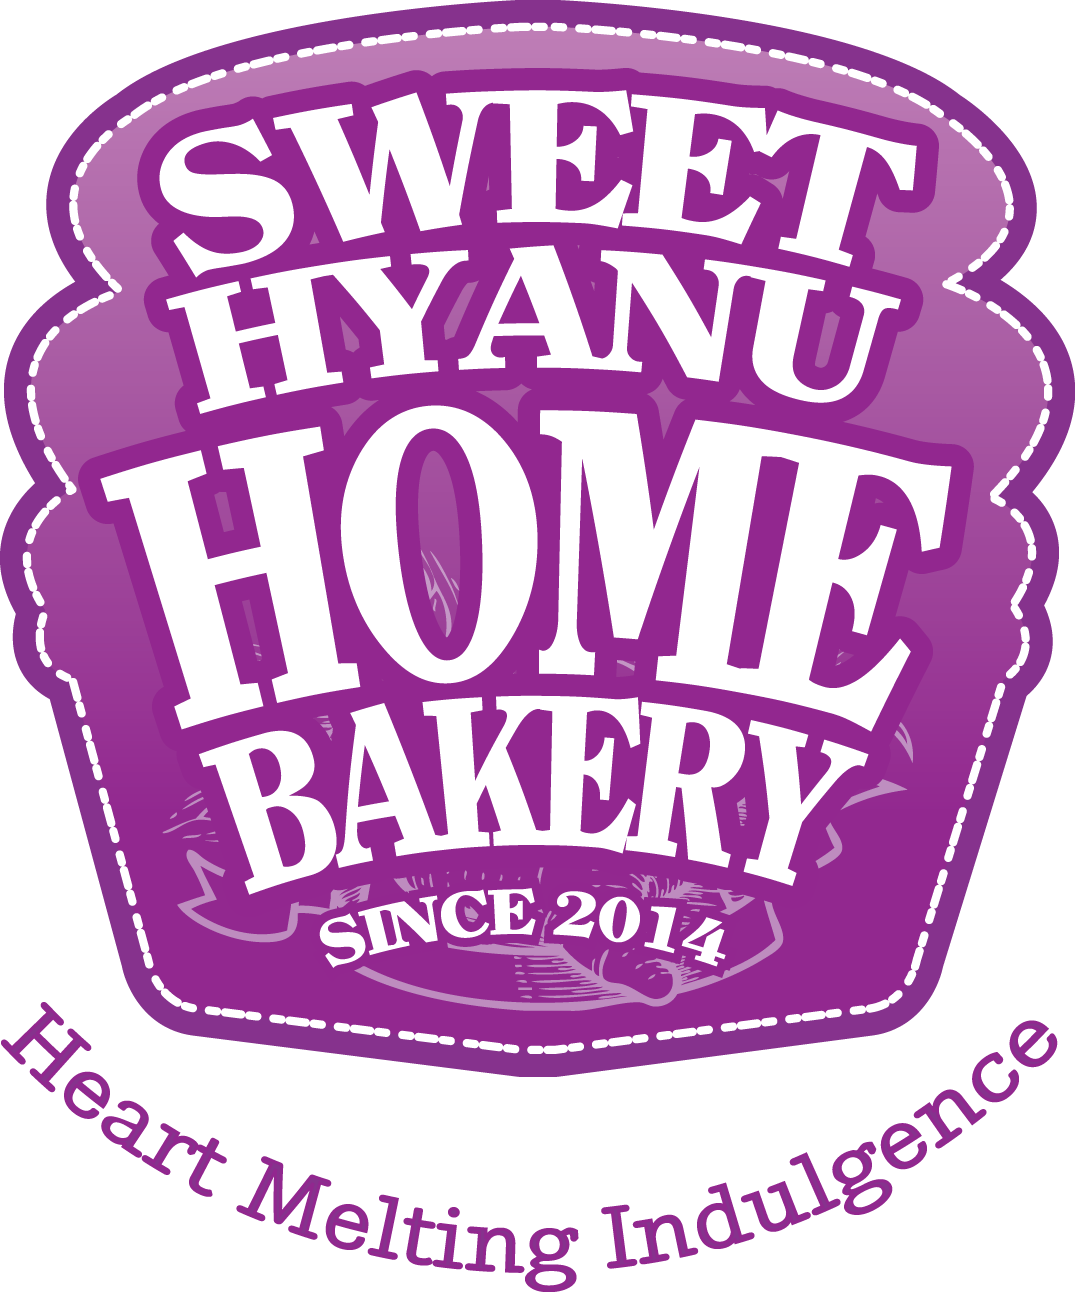 Sweet Hyanu is in the Facebook